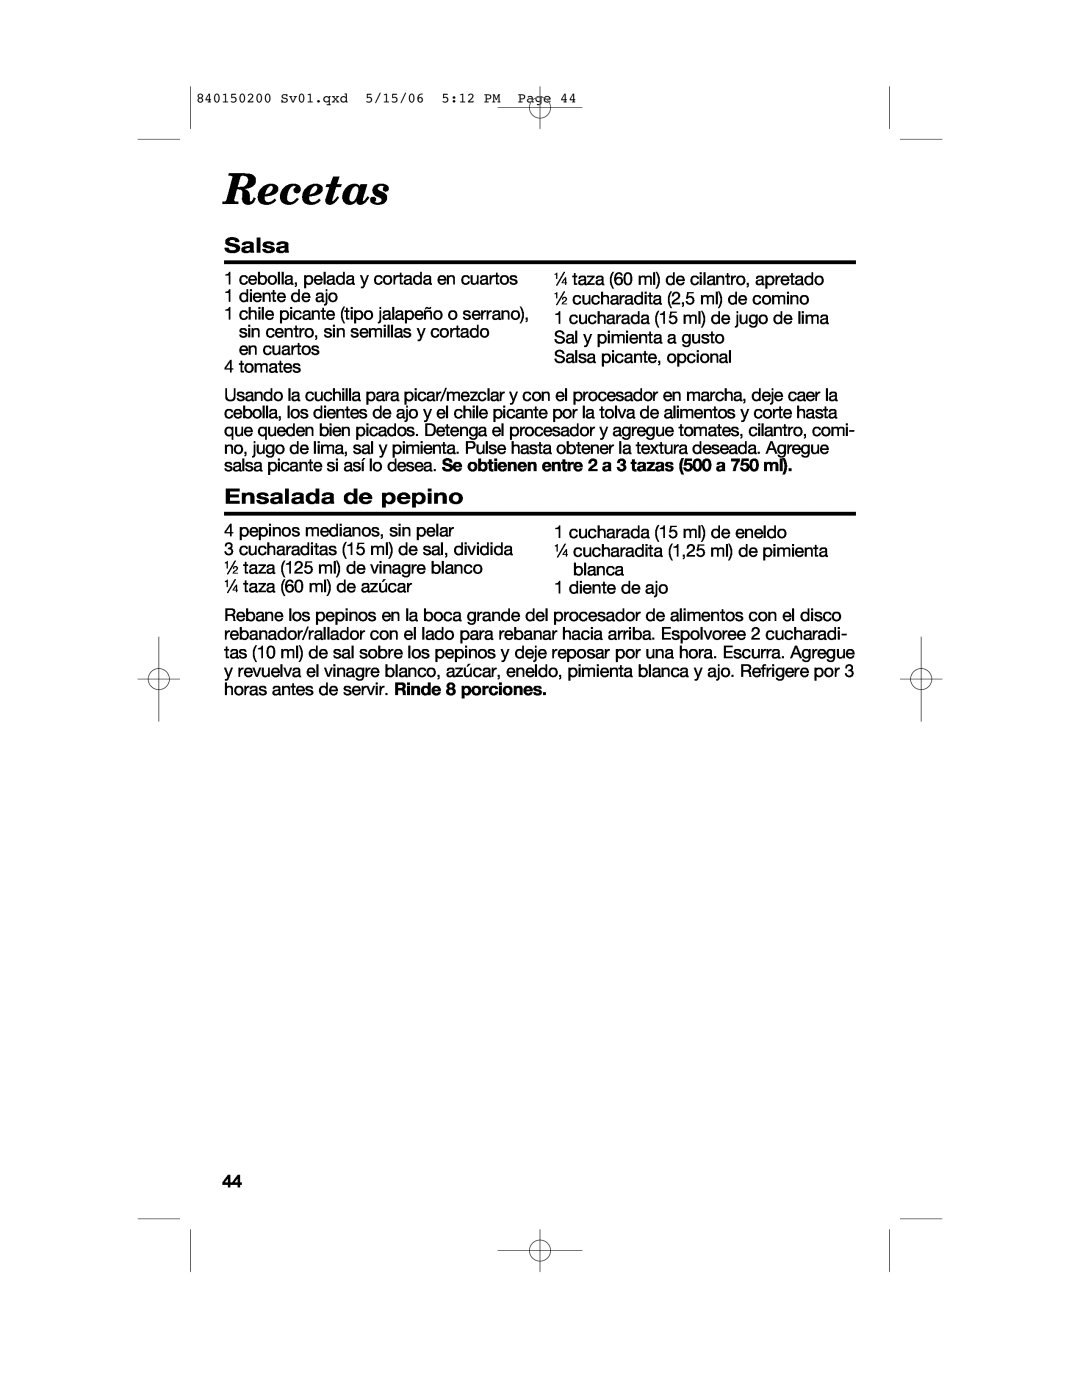 Proctor-Silex 840150200 manual Recetas, Ensalada de pepino, Salsa 